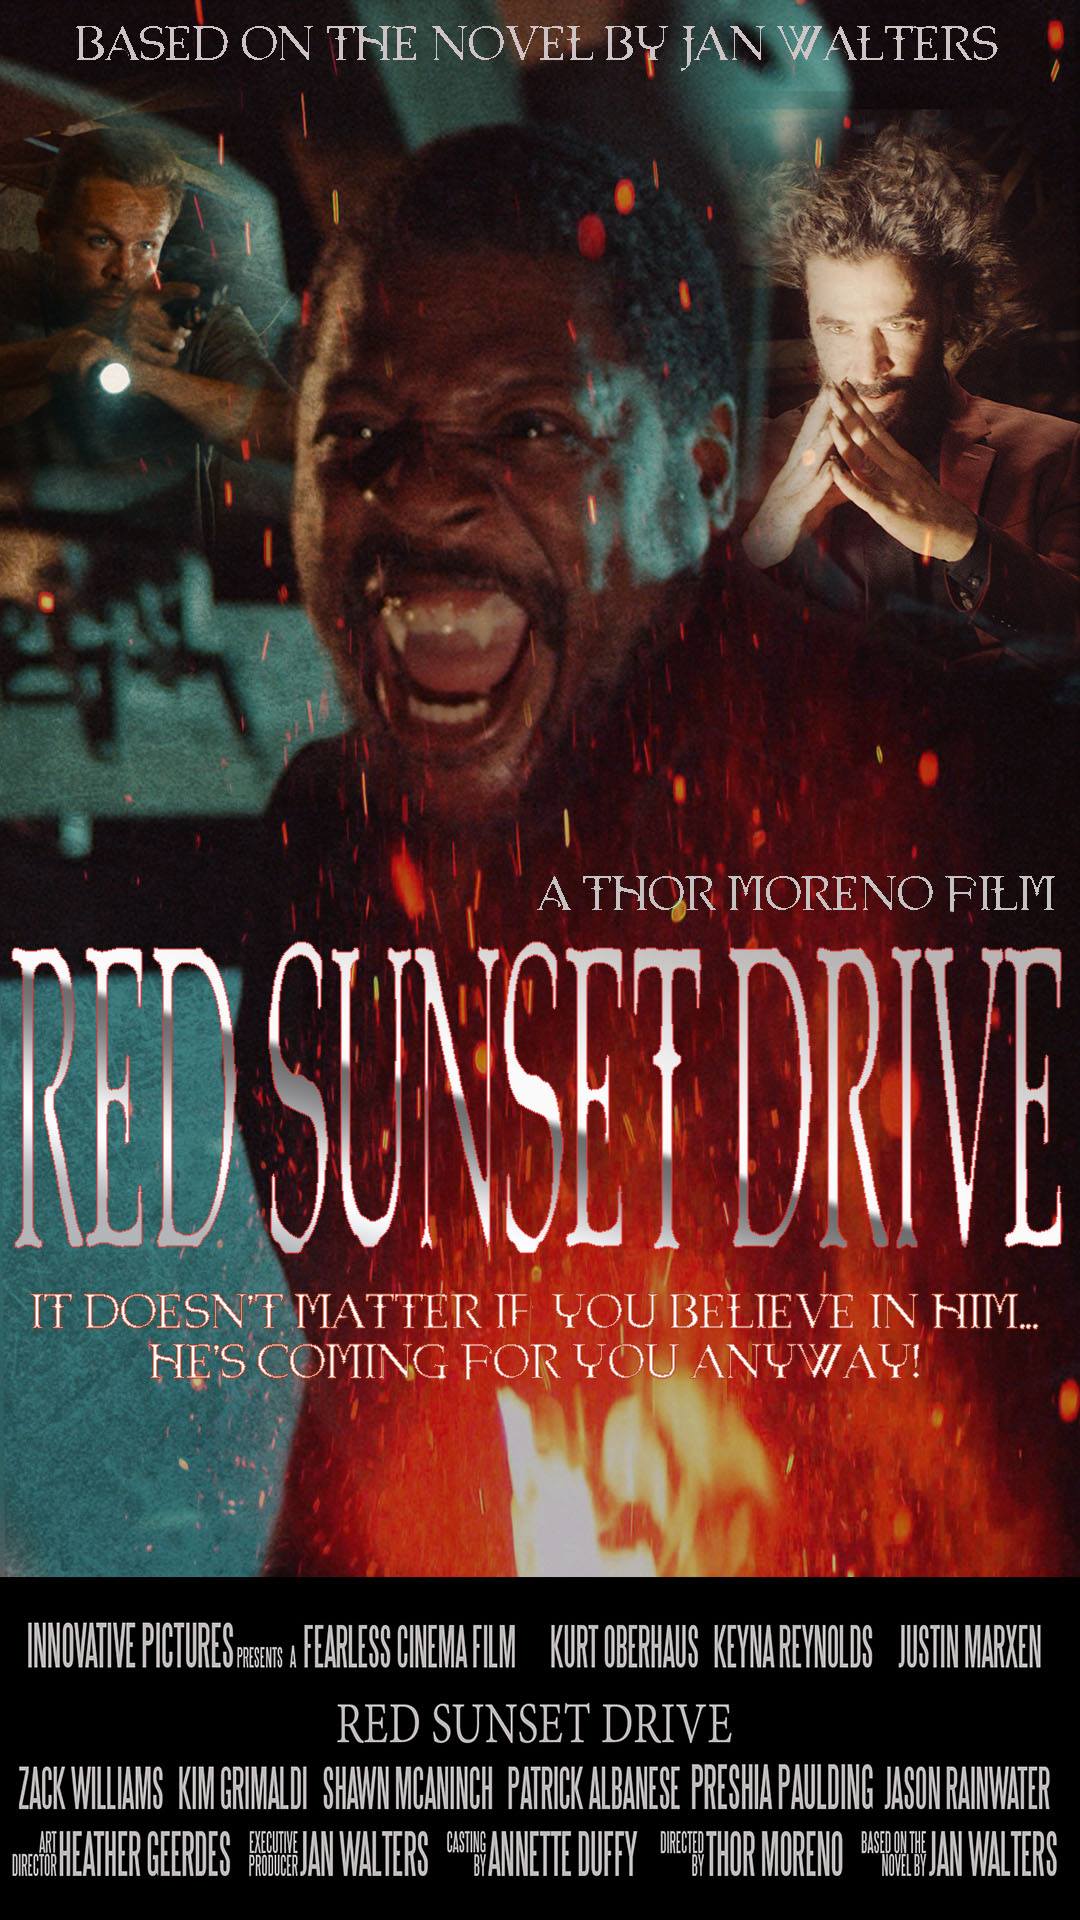 Nonton film Red Sunset Drive layarkaca21 indoxx1 ganool online streaming terbaru